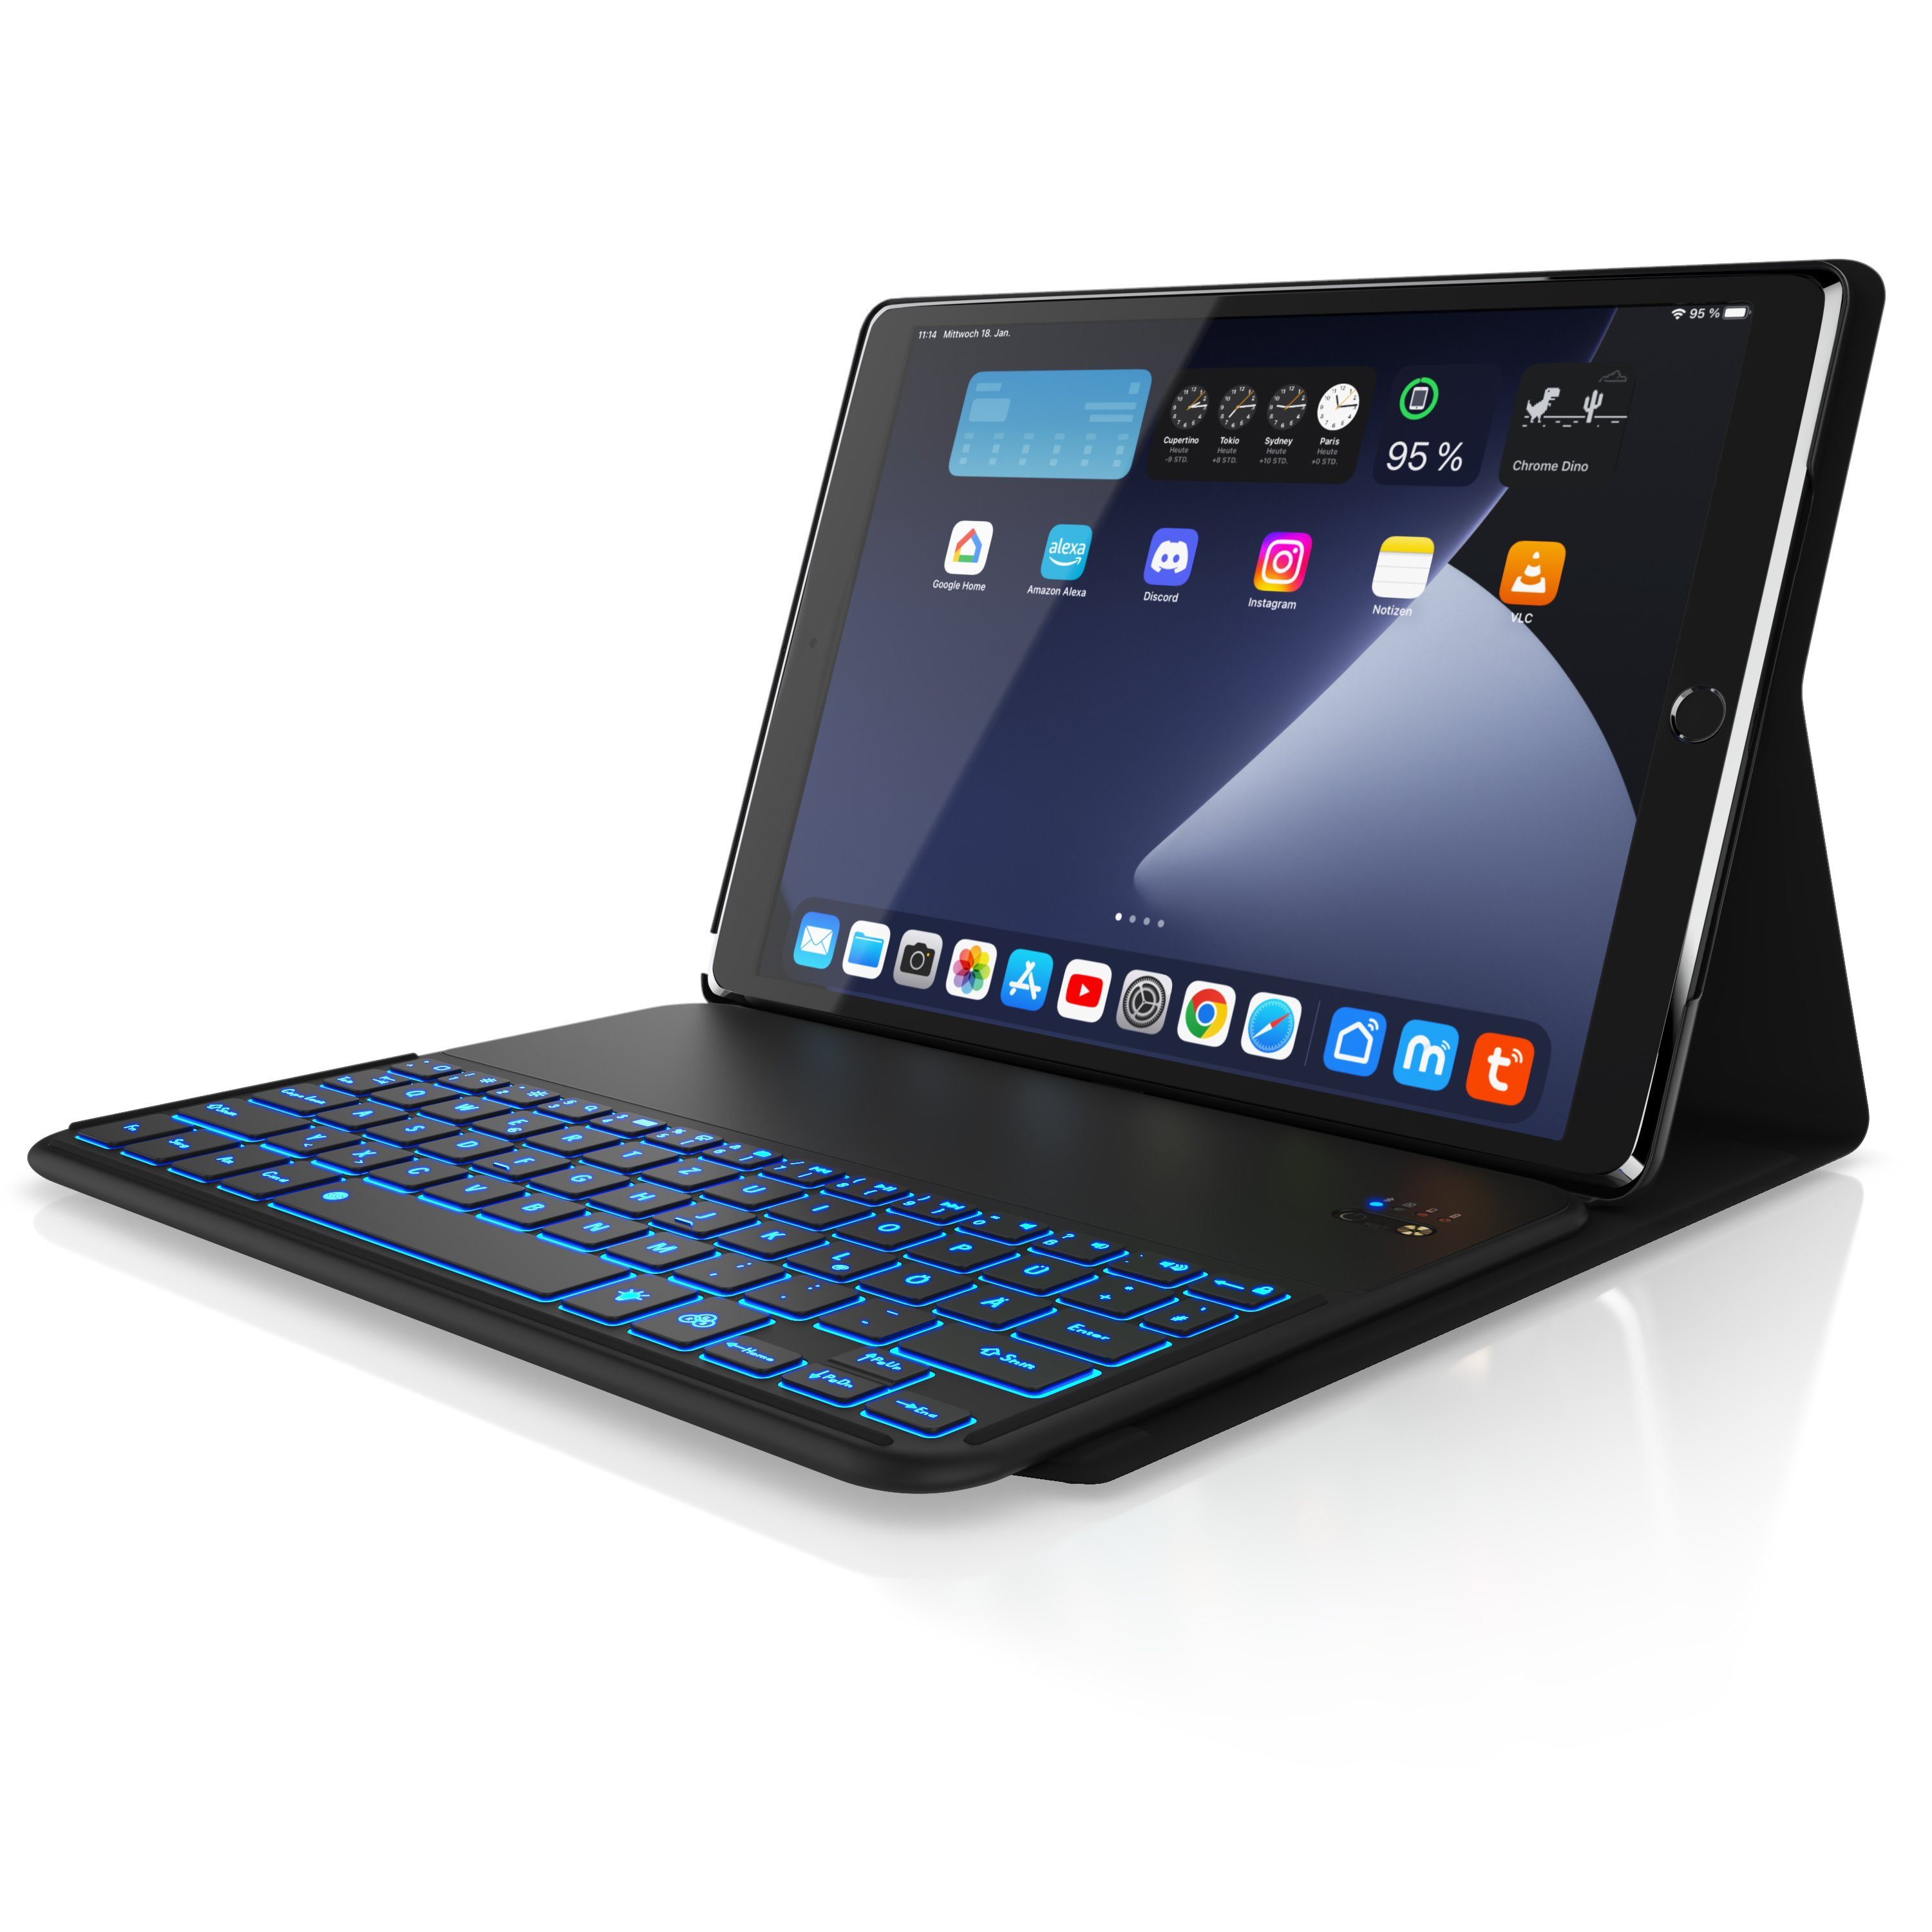 Aplic Tablet-Tastatur (Kunstledercase für iPad Apple Layout) 10,5", Pro Bluetooth Keyboard mit